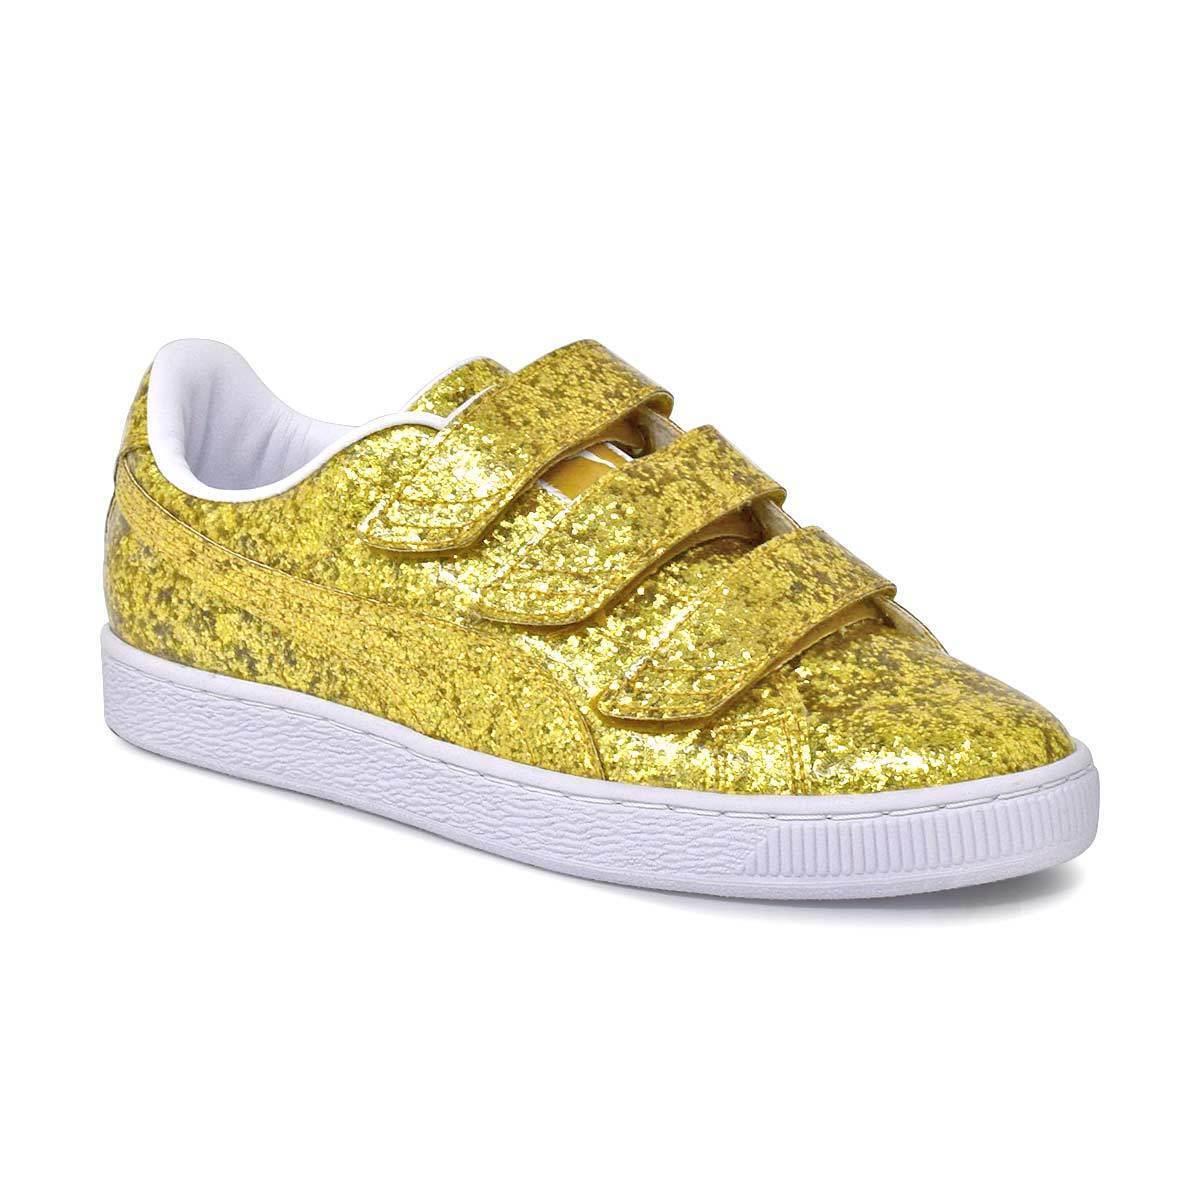 Puma Basket Strap Glitter 364070 02 Women`s Gold Low Top Sneakers Shoes C2065 4.5